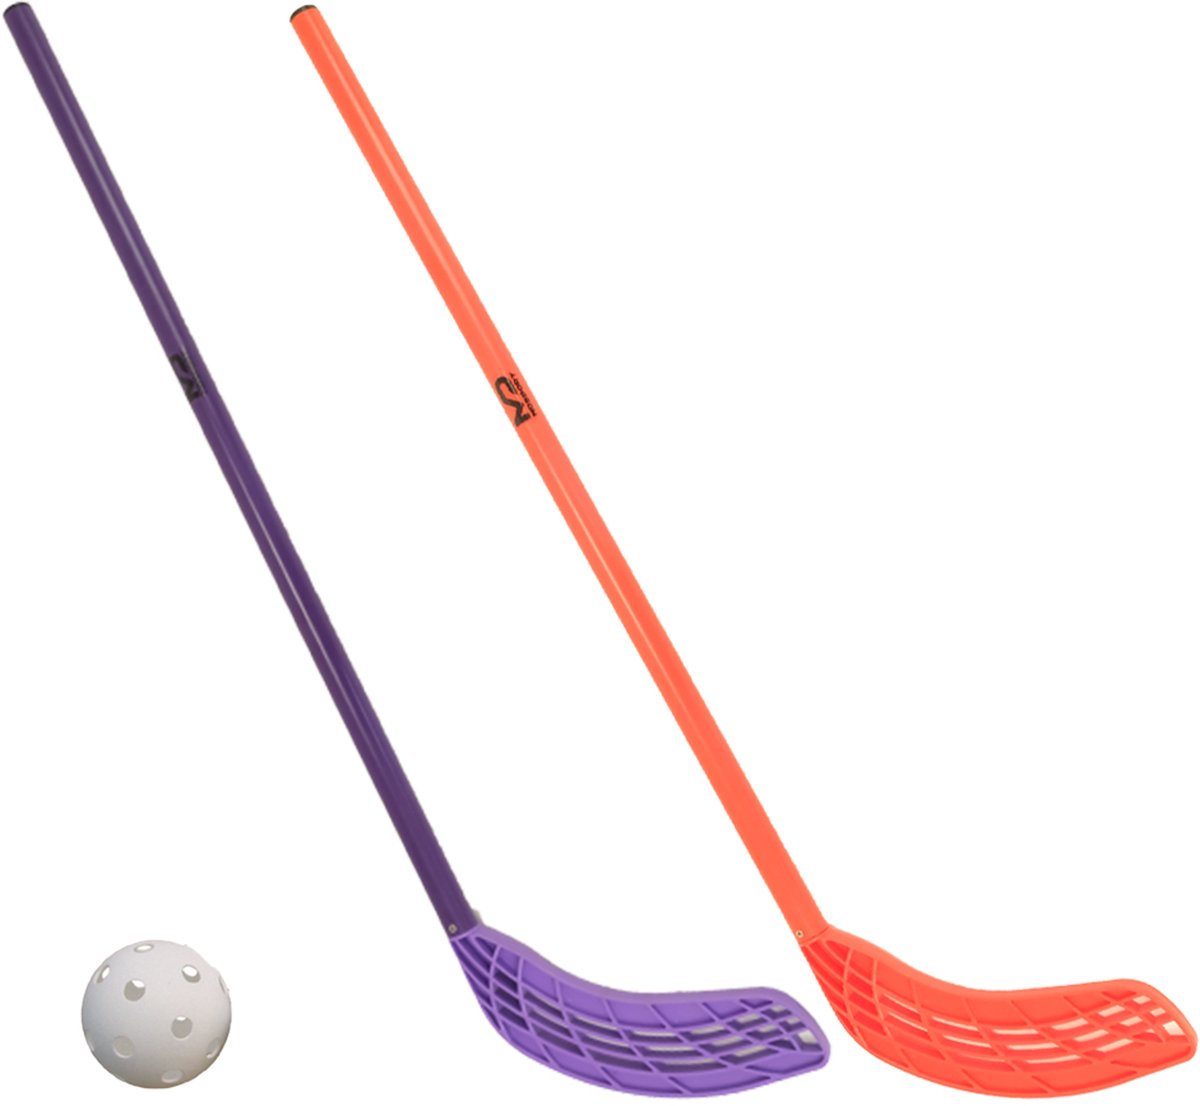 MDsport - Unihockeystick - Basis - Set - 2 sticks + 1 bal - Oranje / Paars